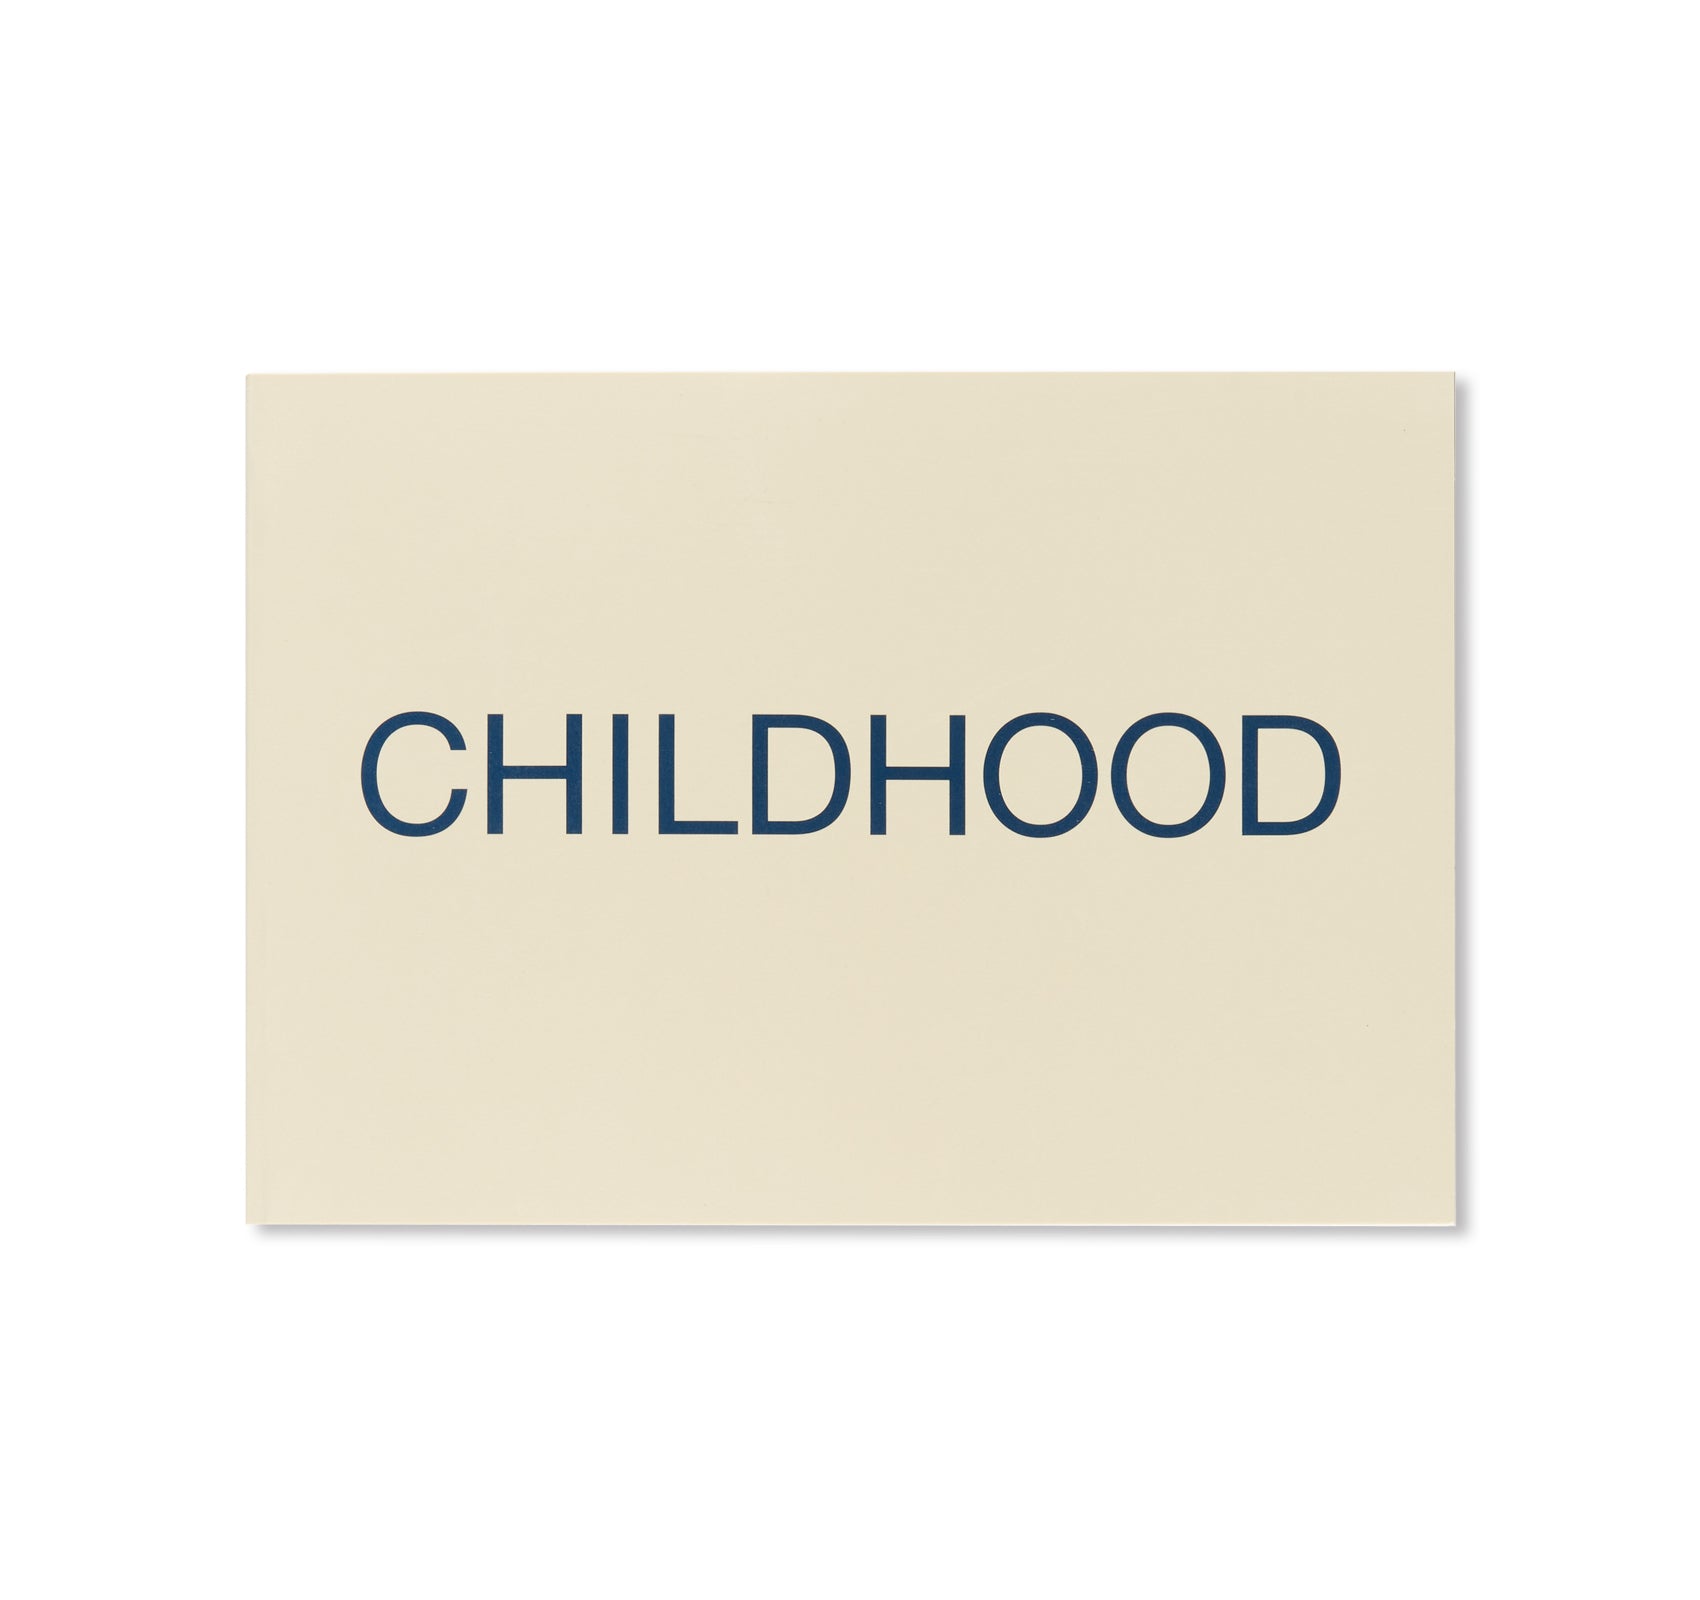 CHILDHOOD by Osamu Wataya [HARDCOVER]